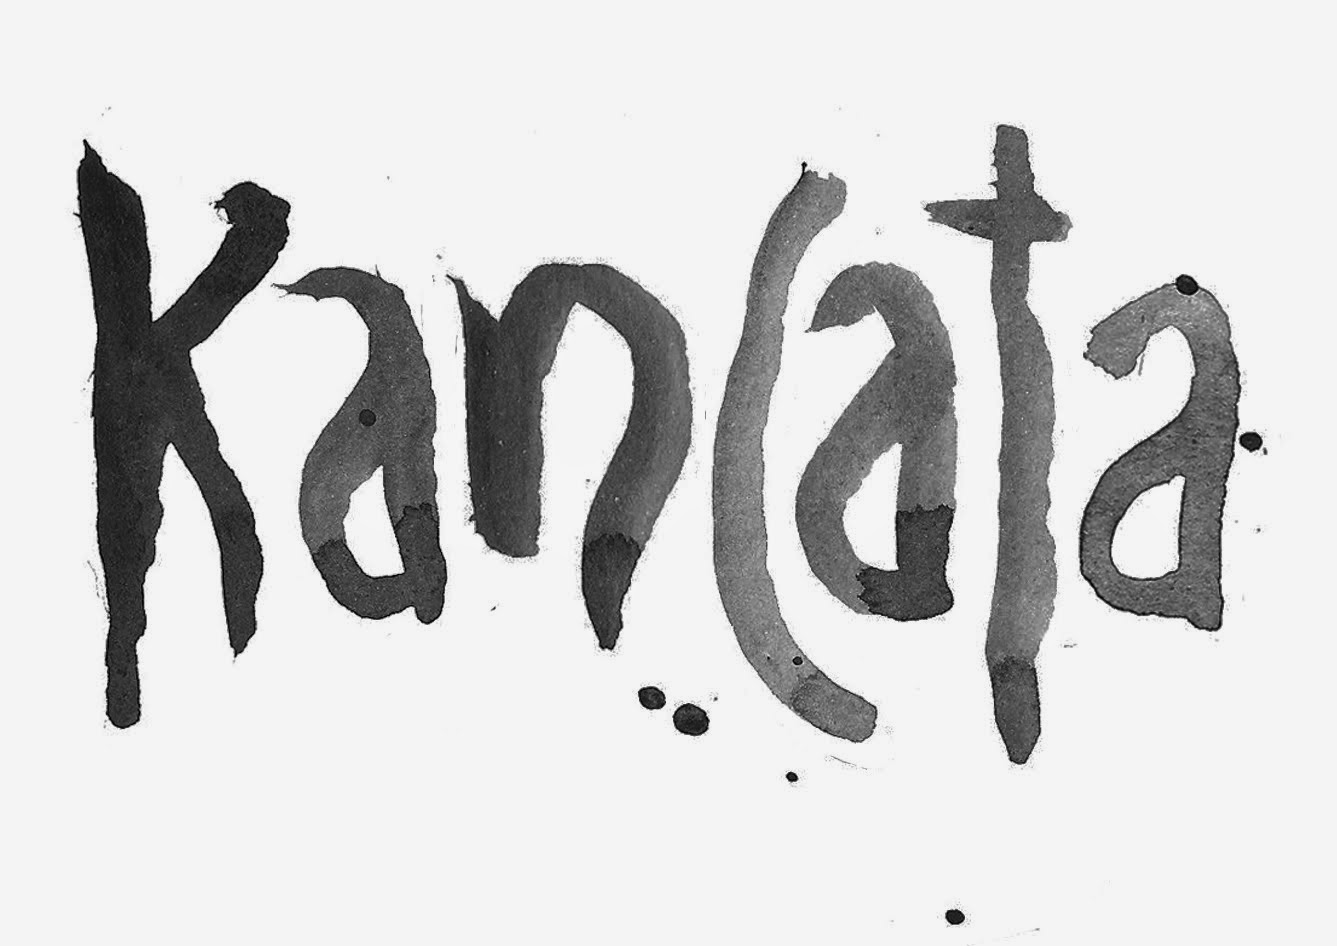 Kancata